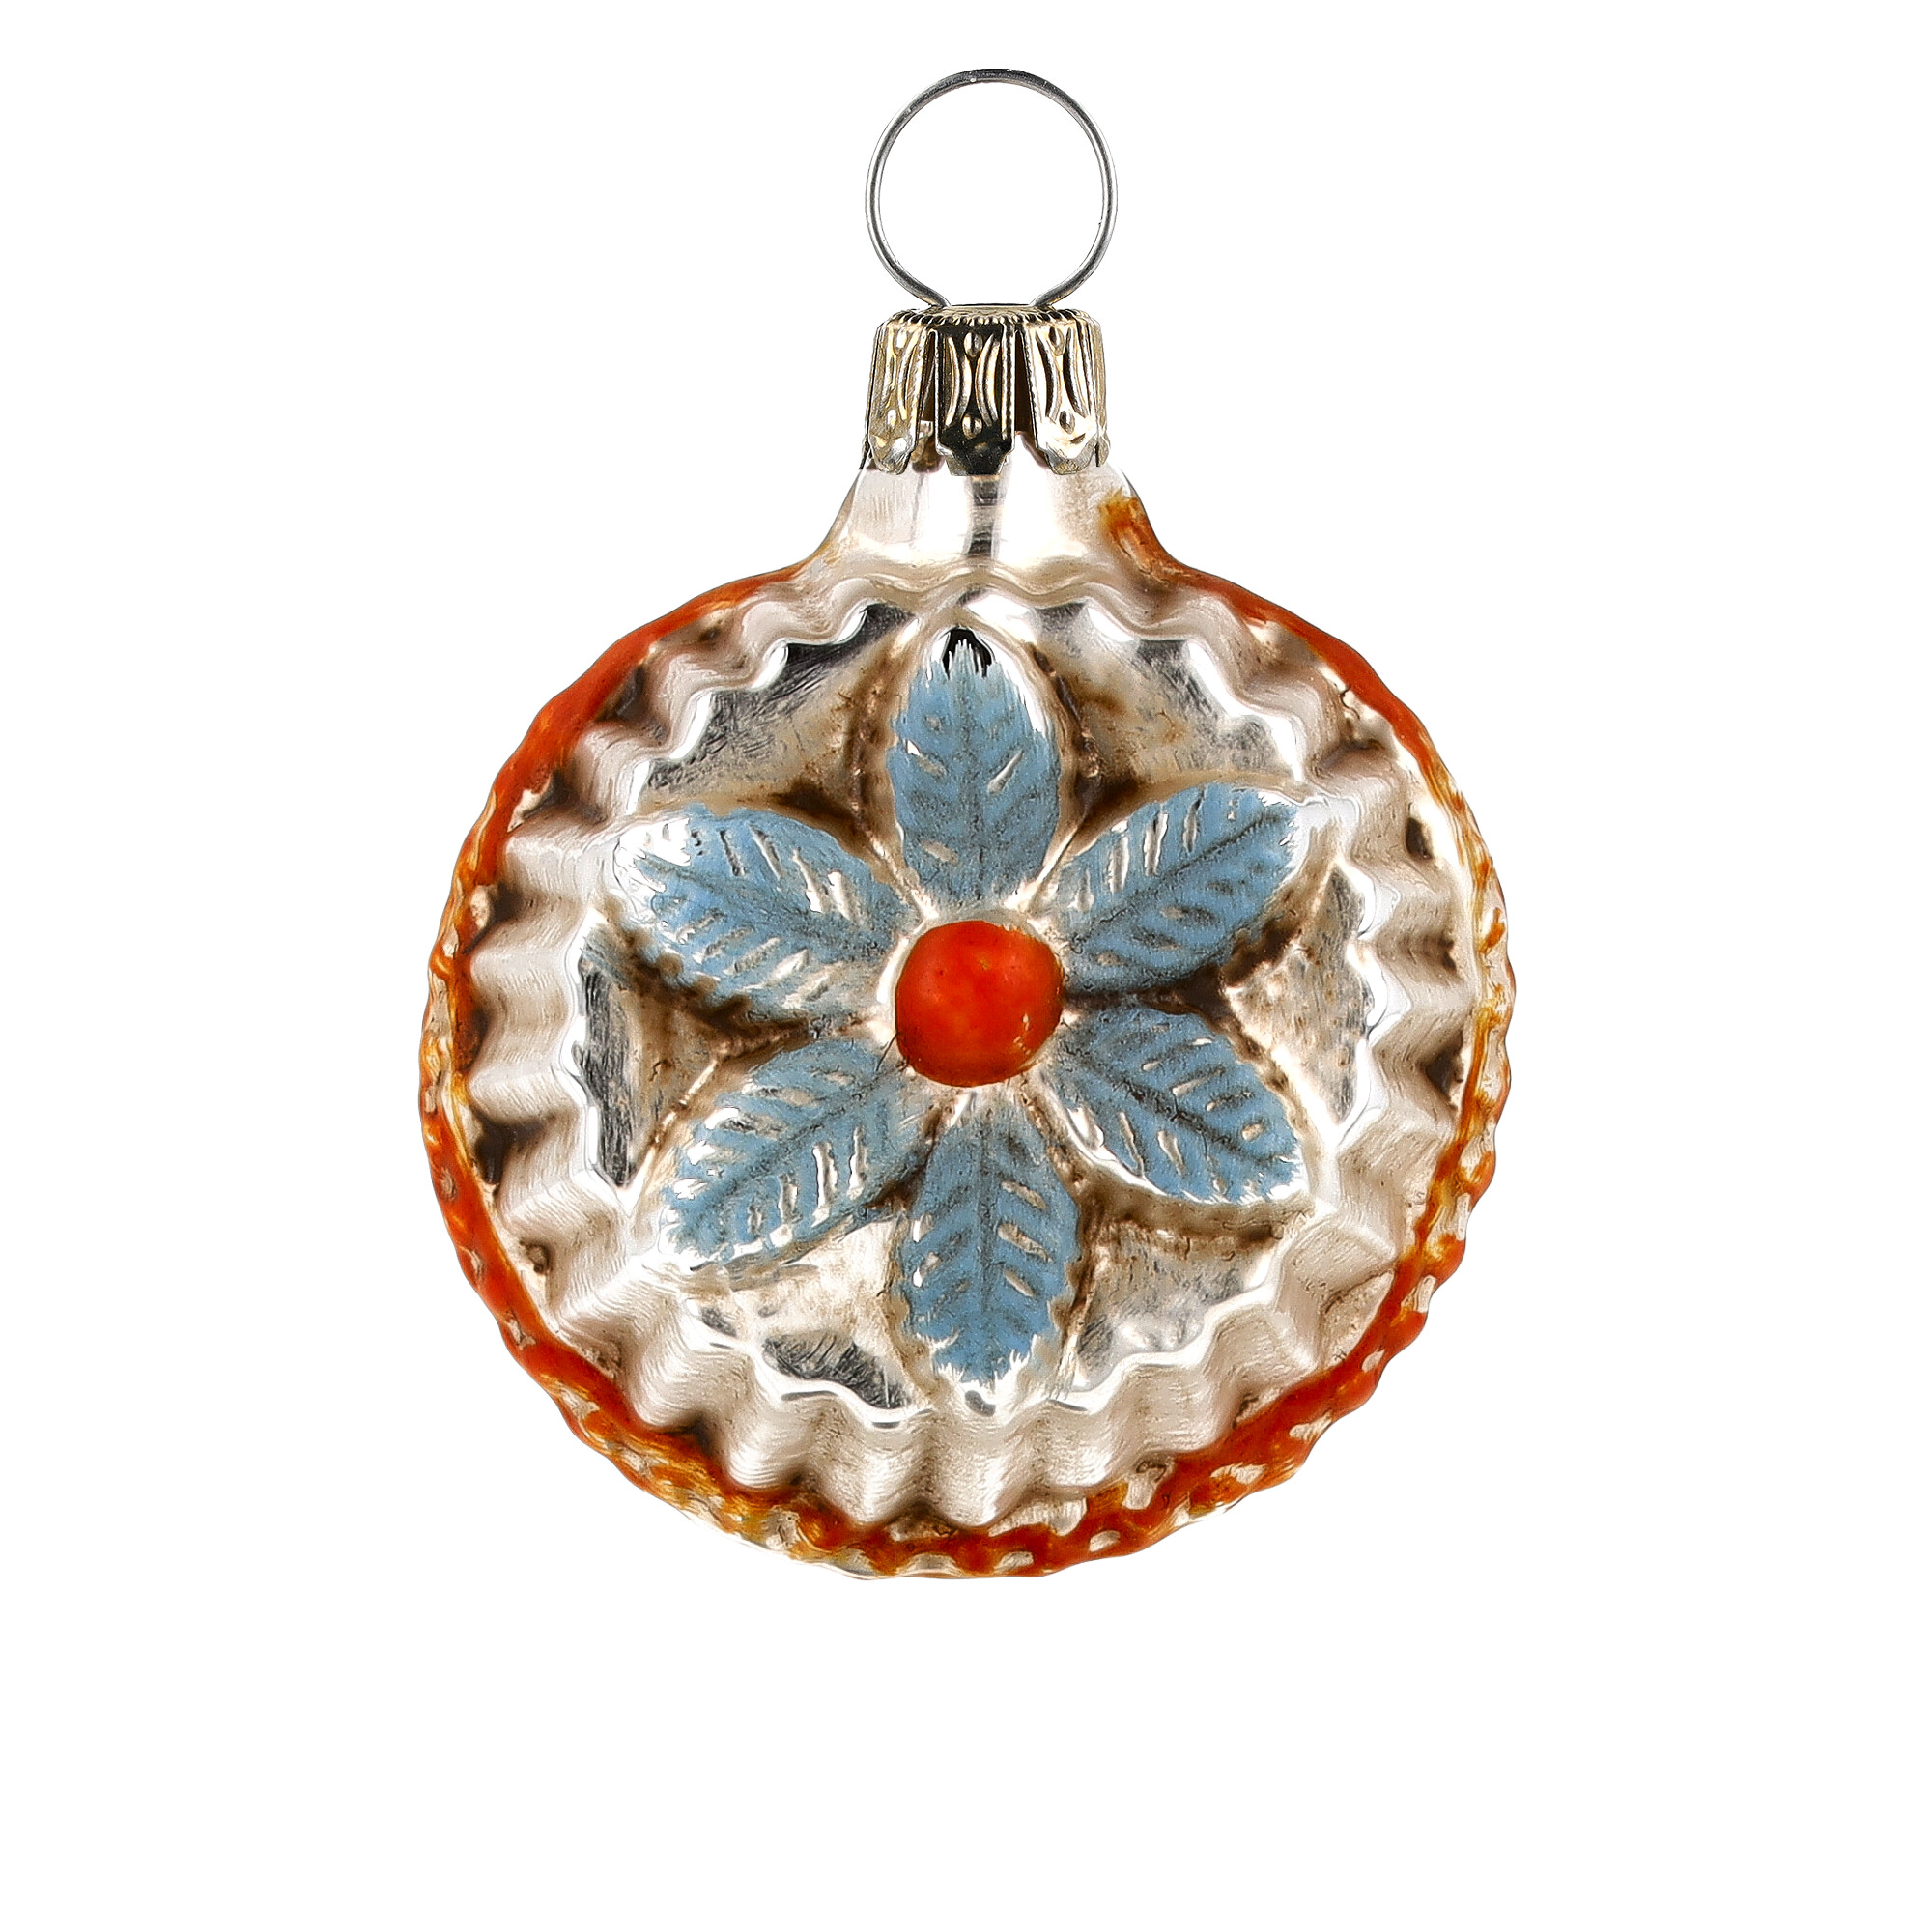 Retro Vintage style Christmas Glass Ornament - Blue blossom